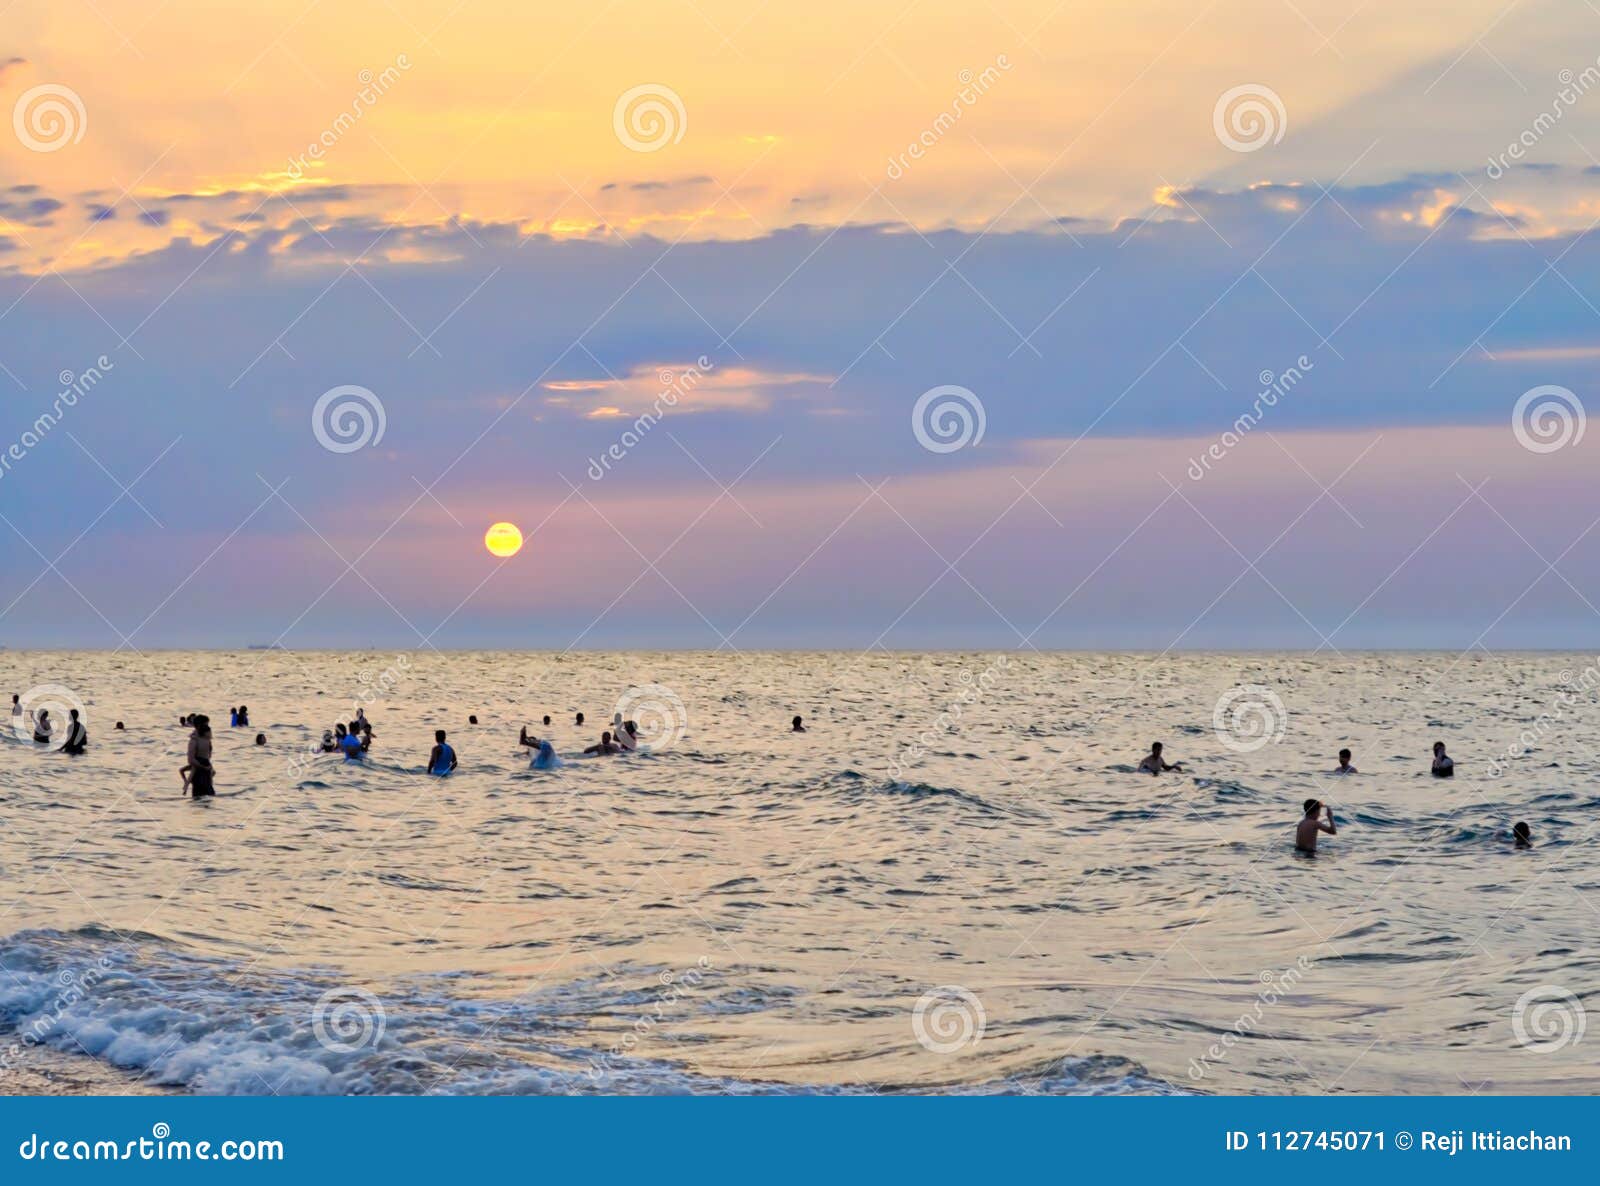 People Enjoying Sea and Sunset! Stock Image - Image of golden ...